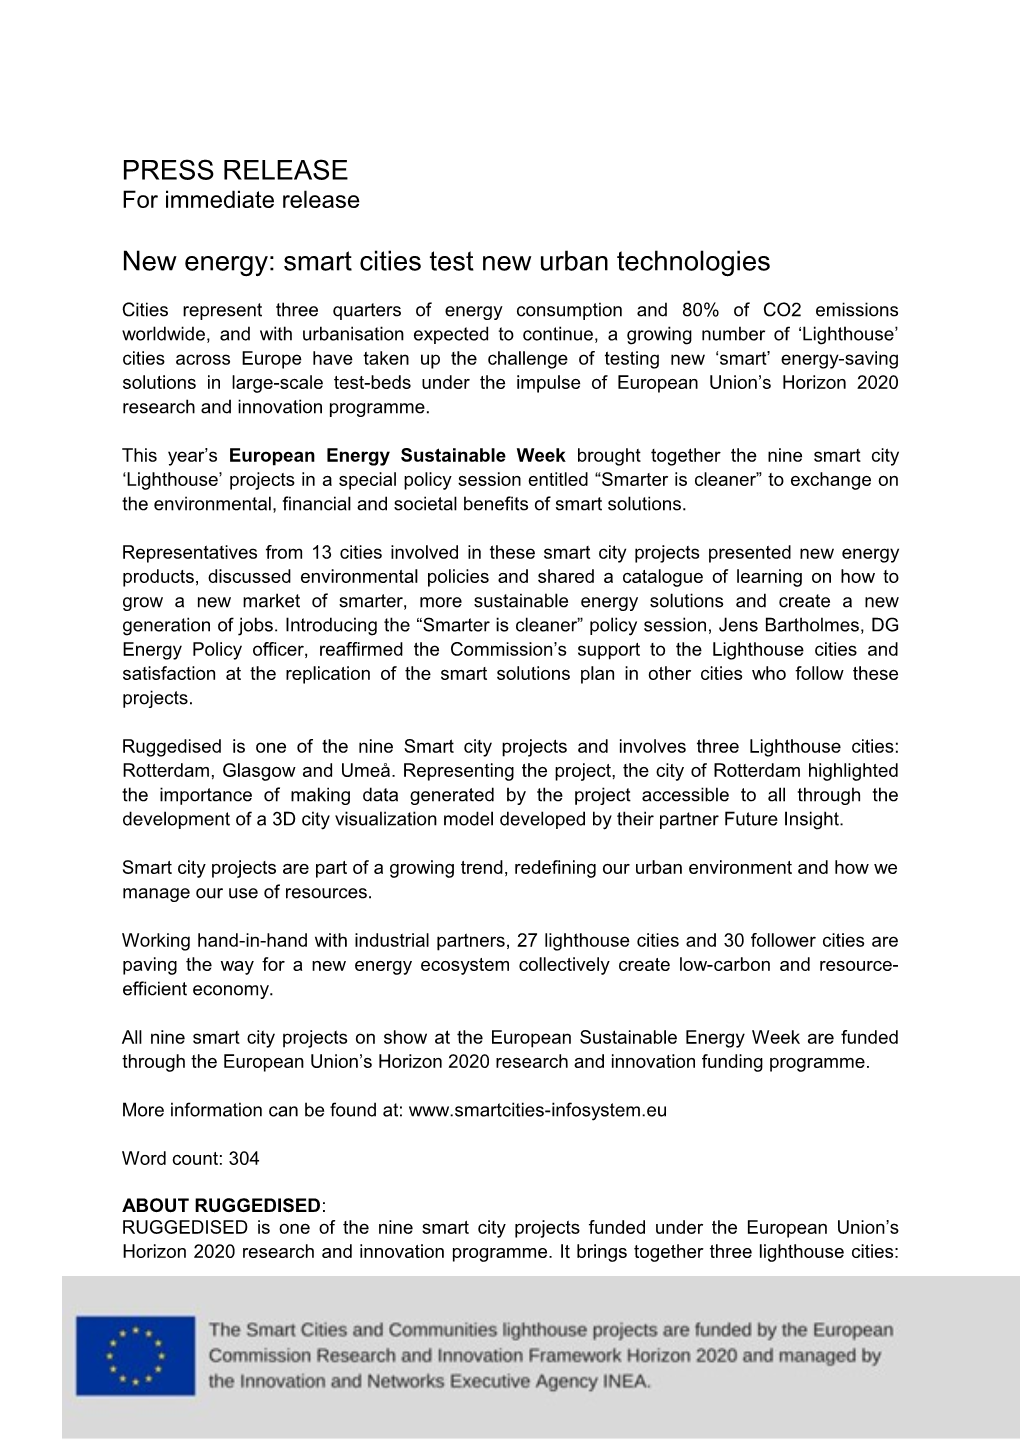 New Energy: Smart Cities Test New Urban Technologies